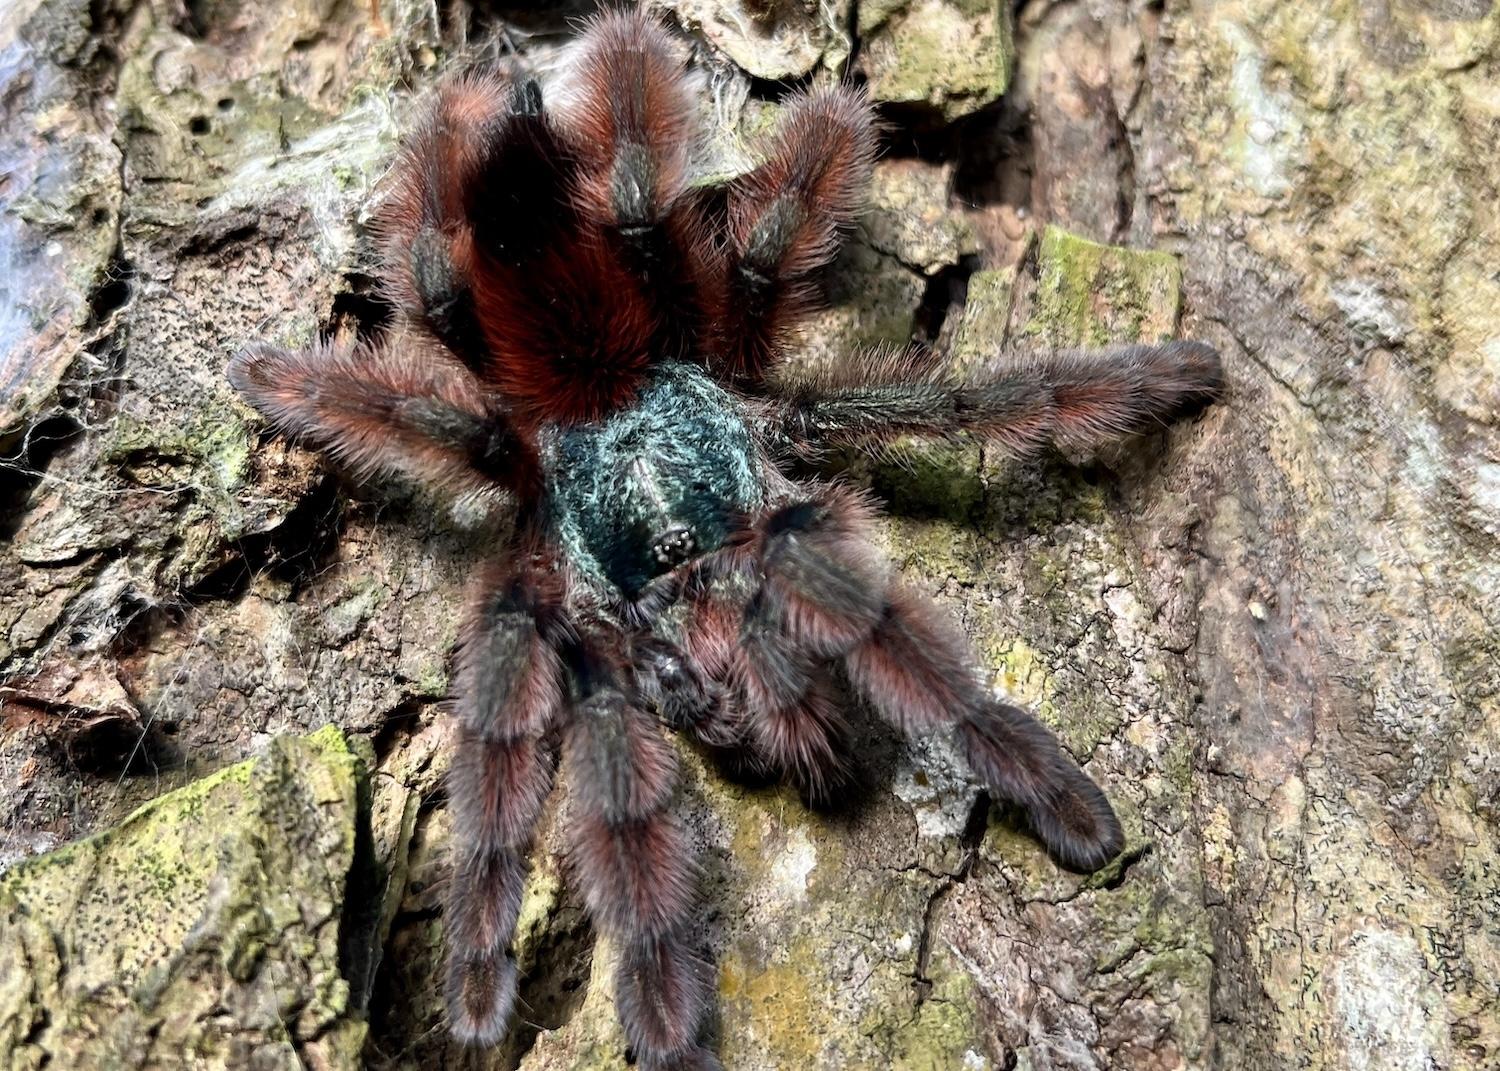 At Habitation Céron, this lovely and docile tarantula (Matoutou Falaise) lives on trees.